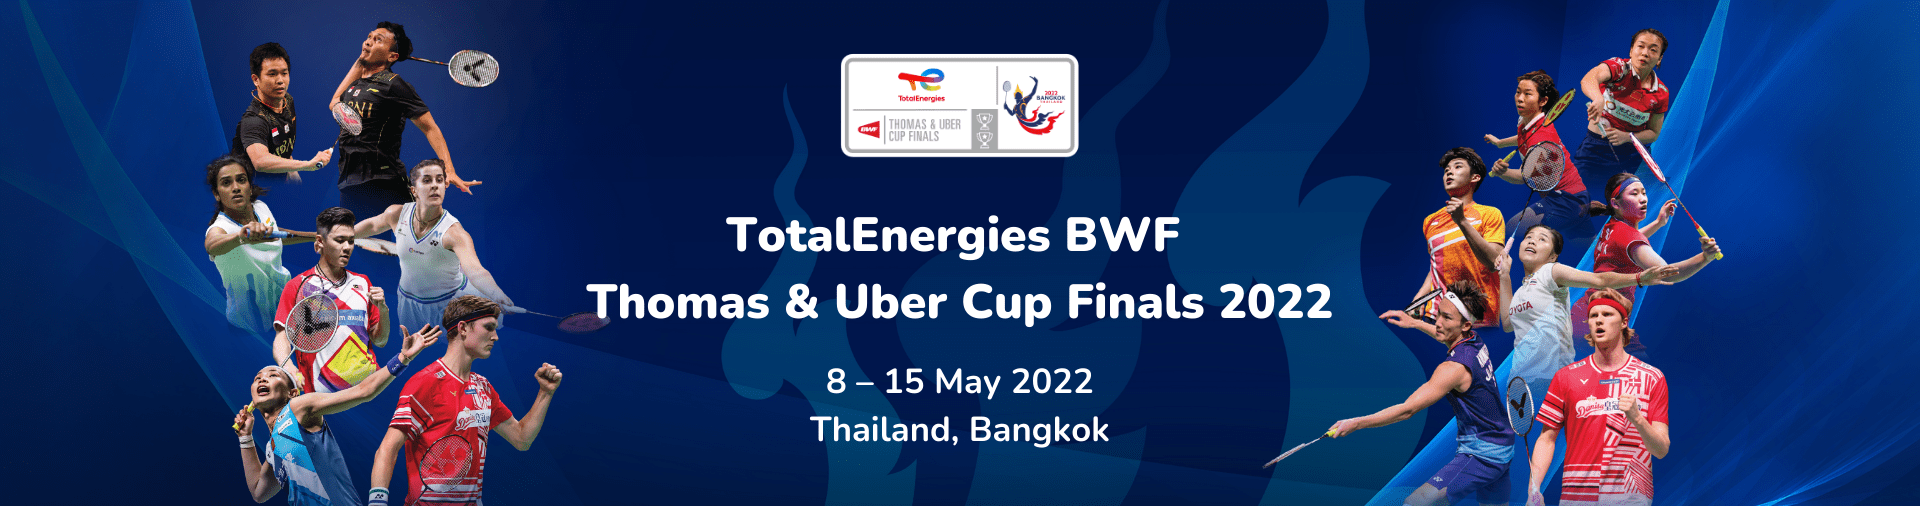 TotalEnergies BWF Thomas & Uber Cup 2022 banner